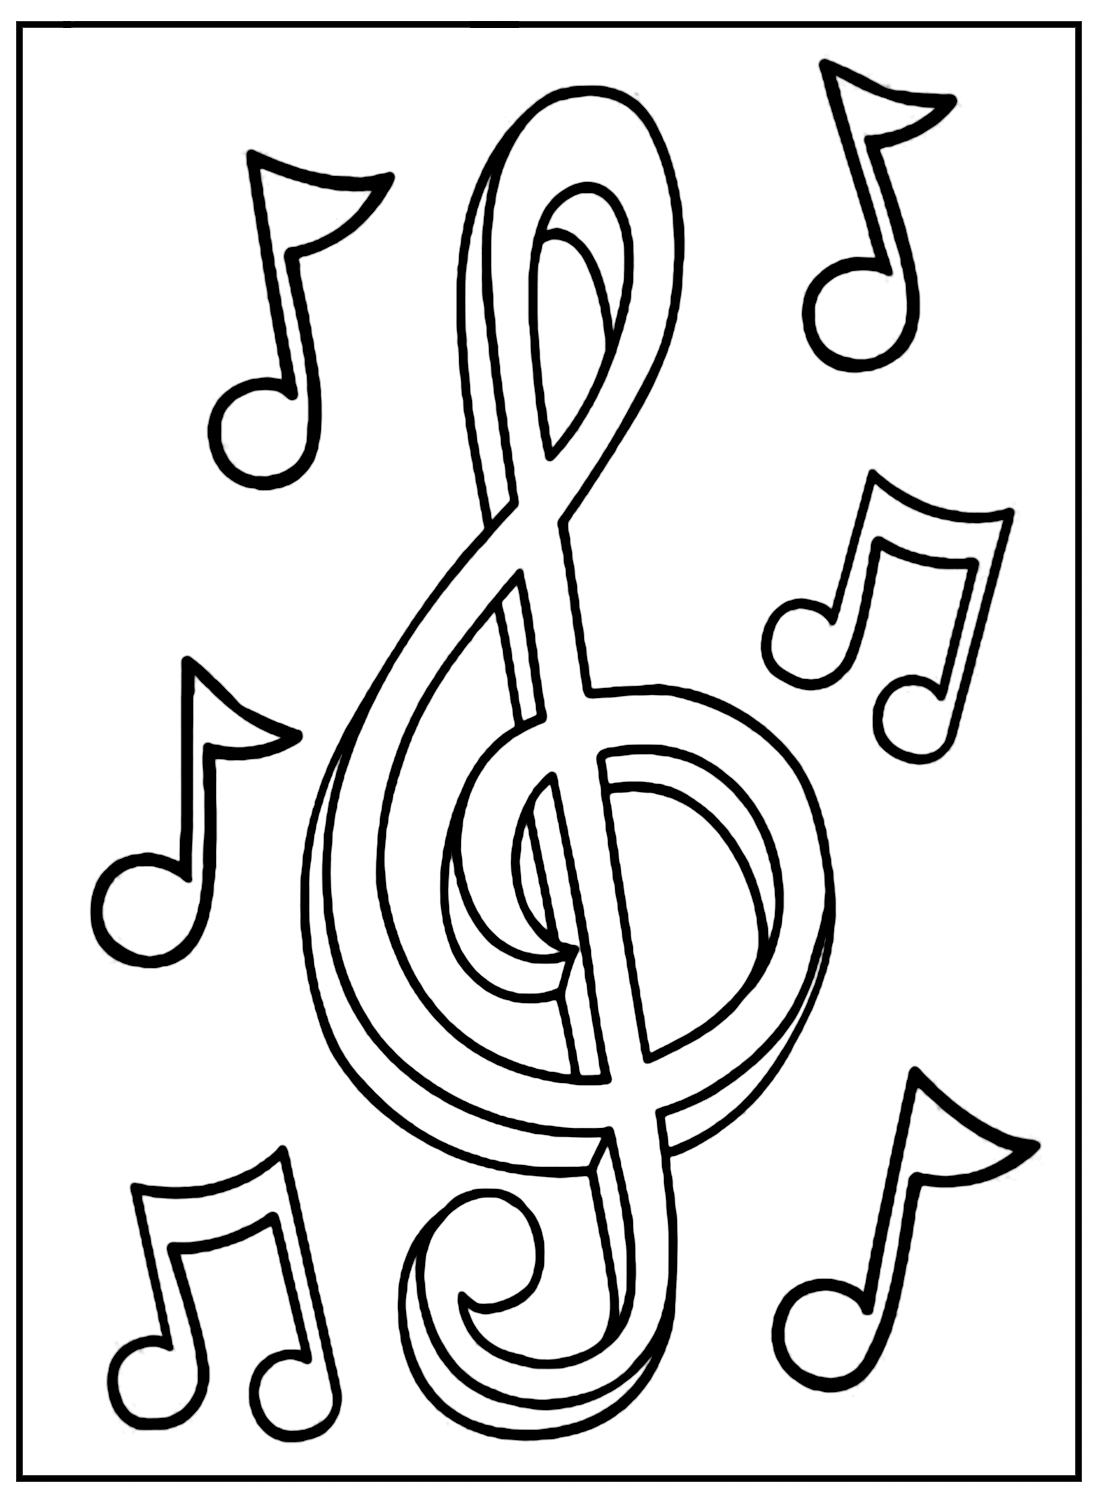 Notas musicales dibujadas a partir de notas musicales.